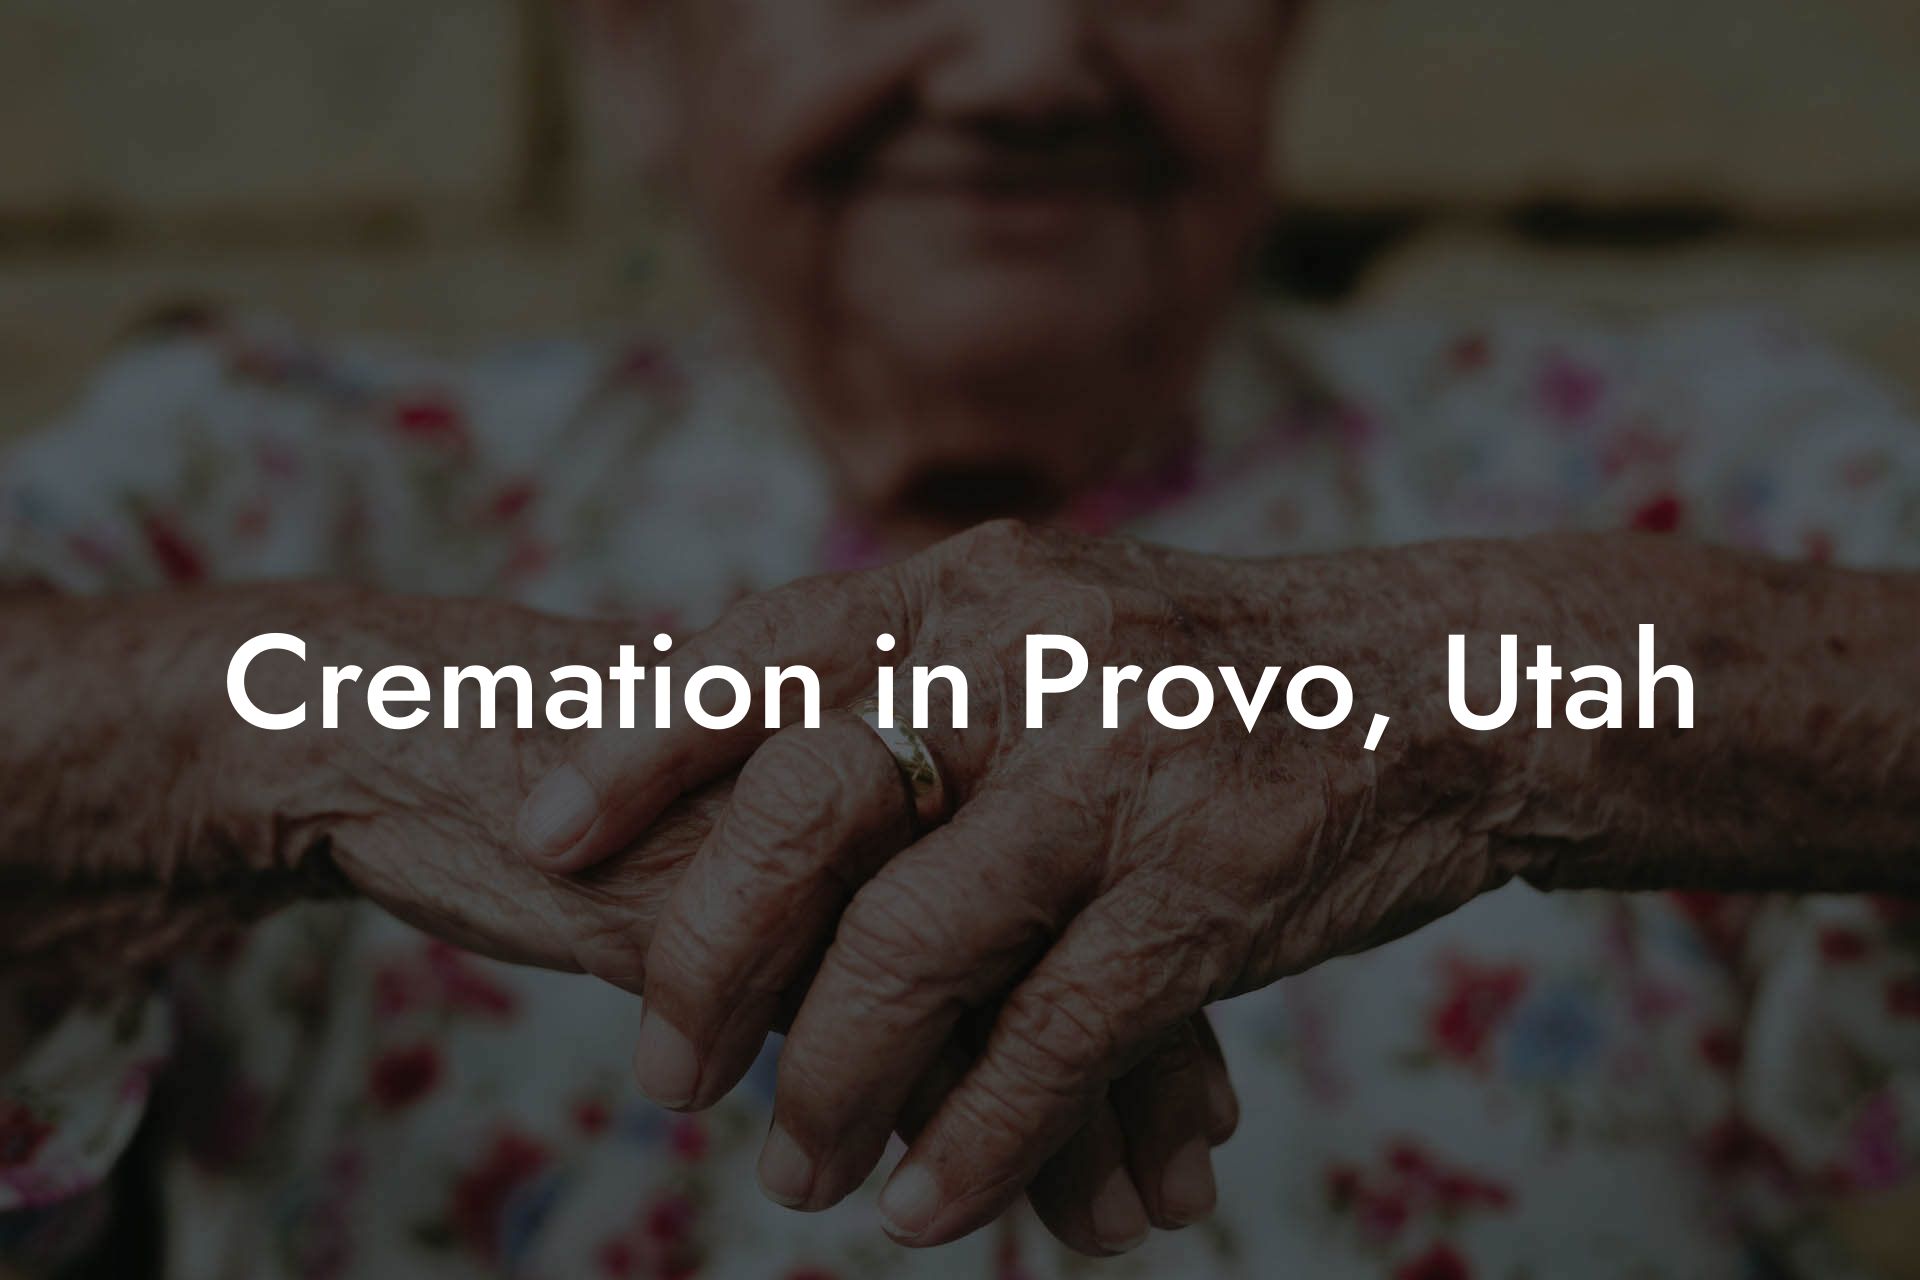 Cremation in Provo, Utah